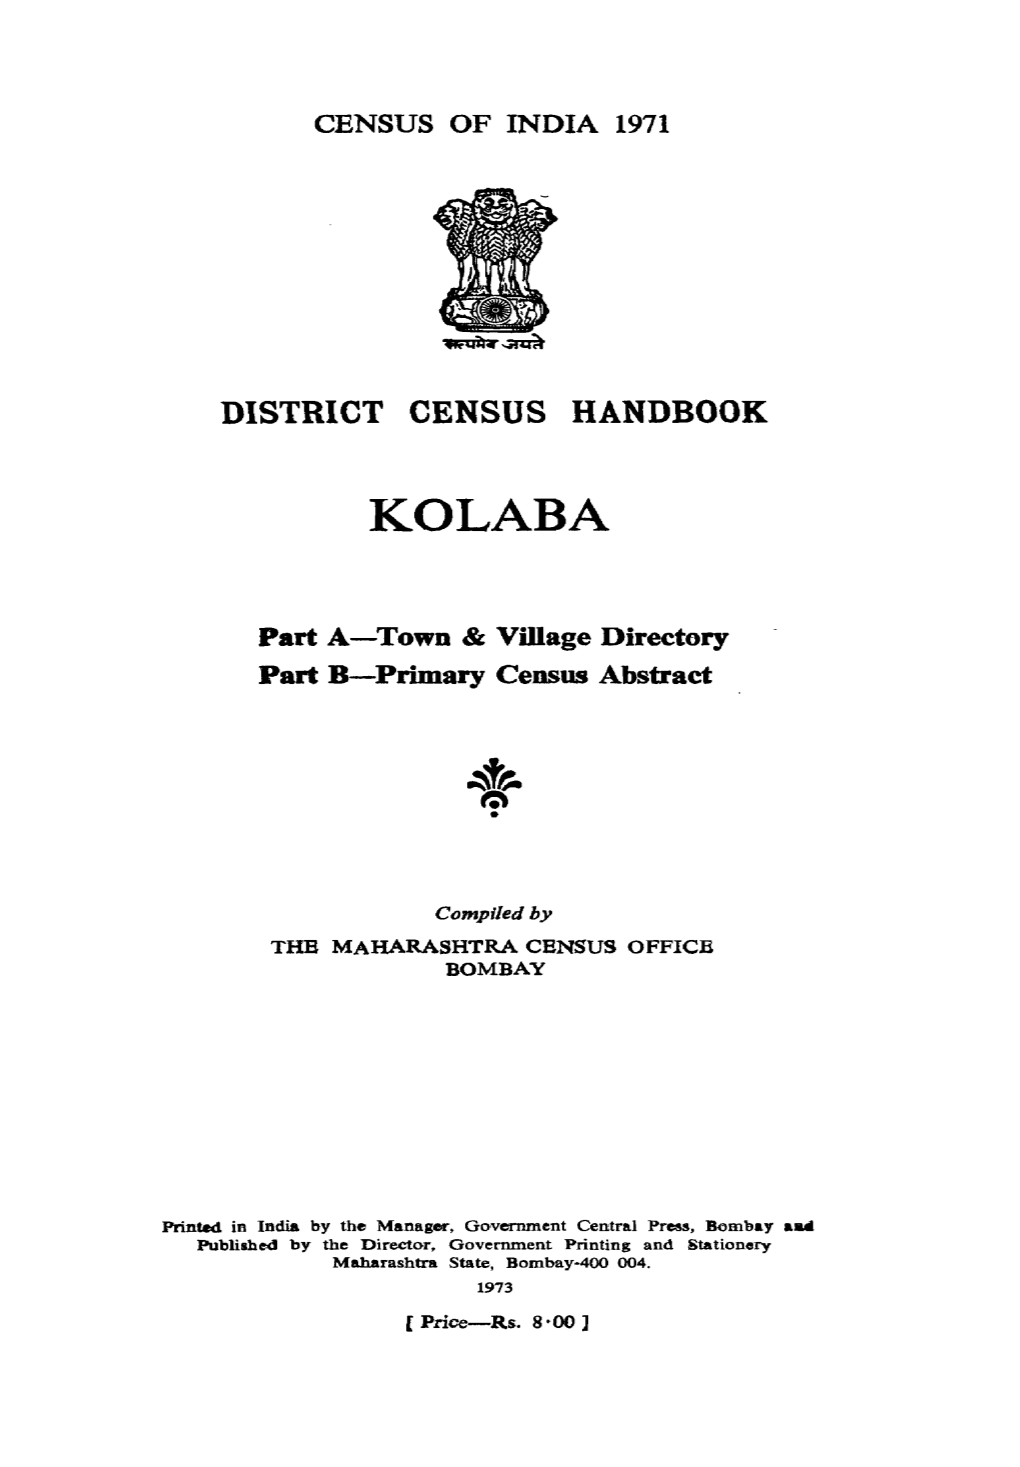 District Census Handbook, Kolaba, Part